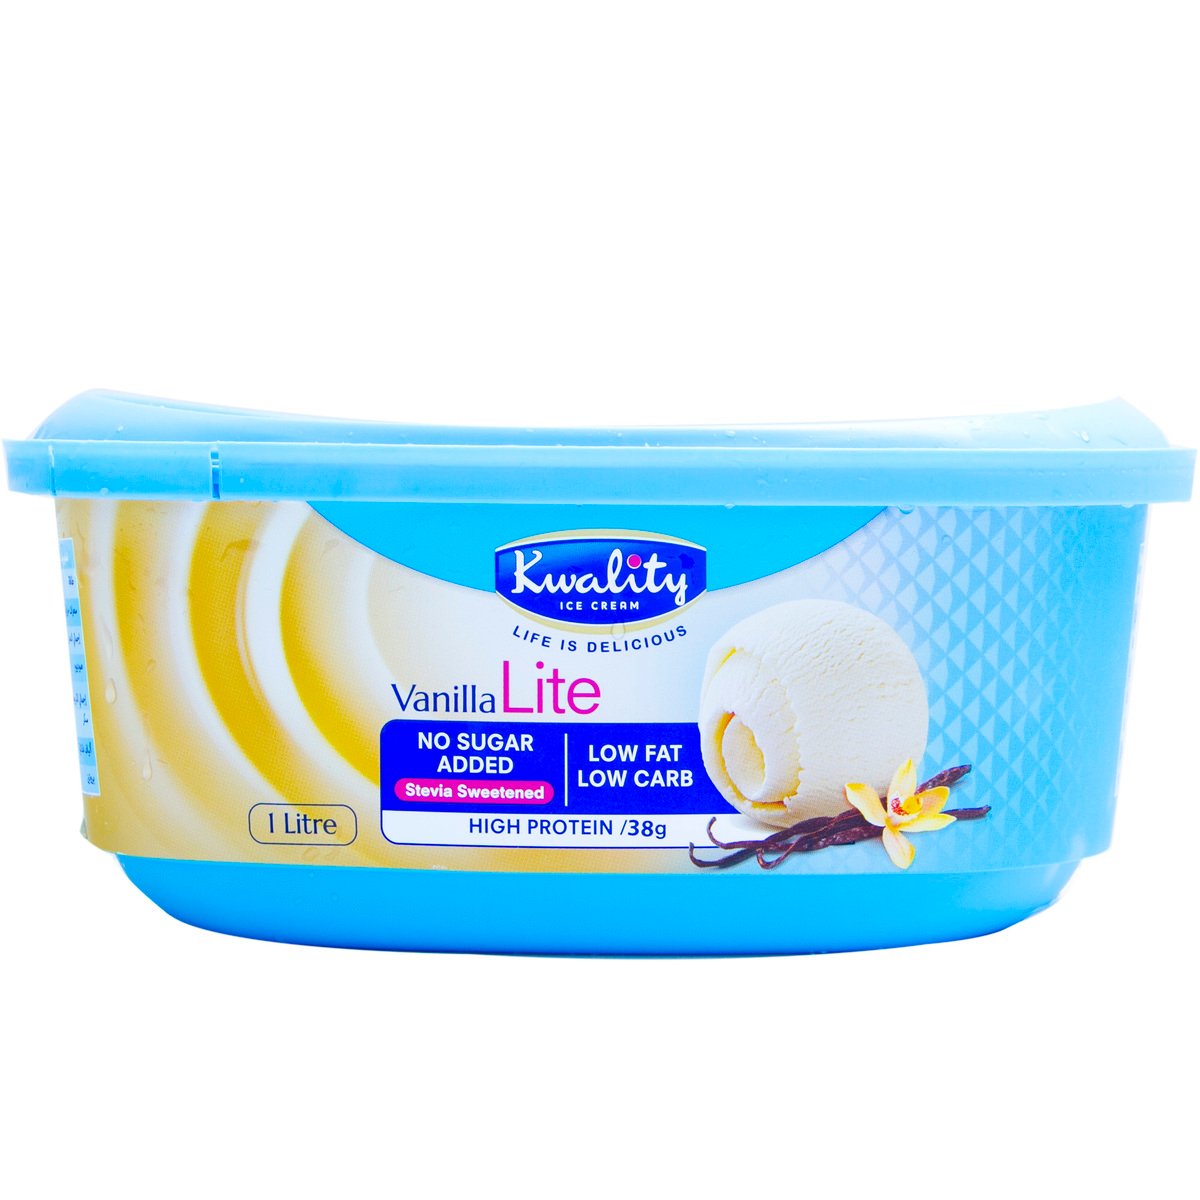 Kwality Vanilla Lite Ice Cream 1 Litre